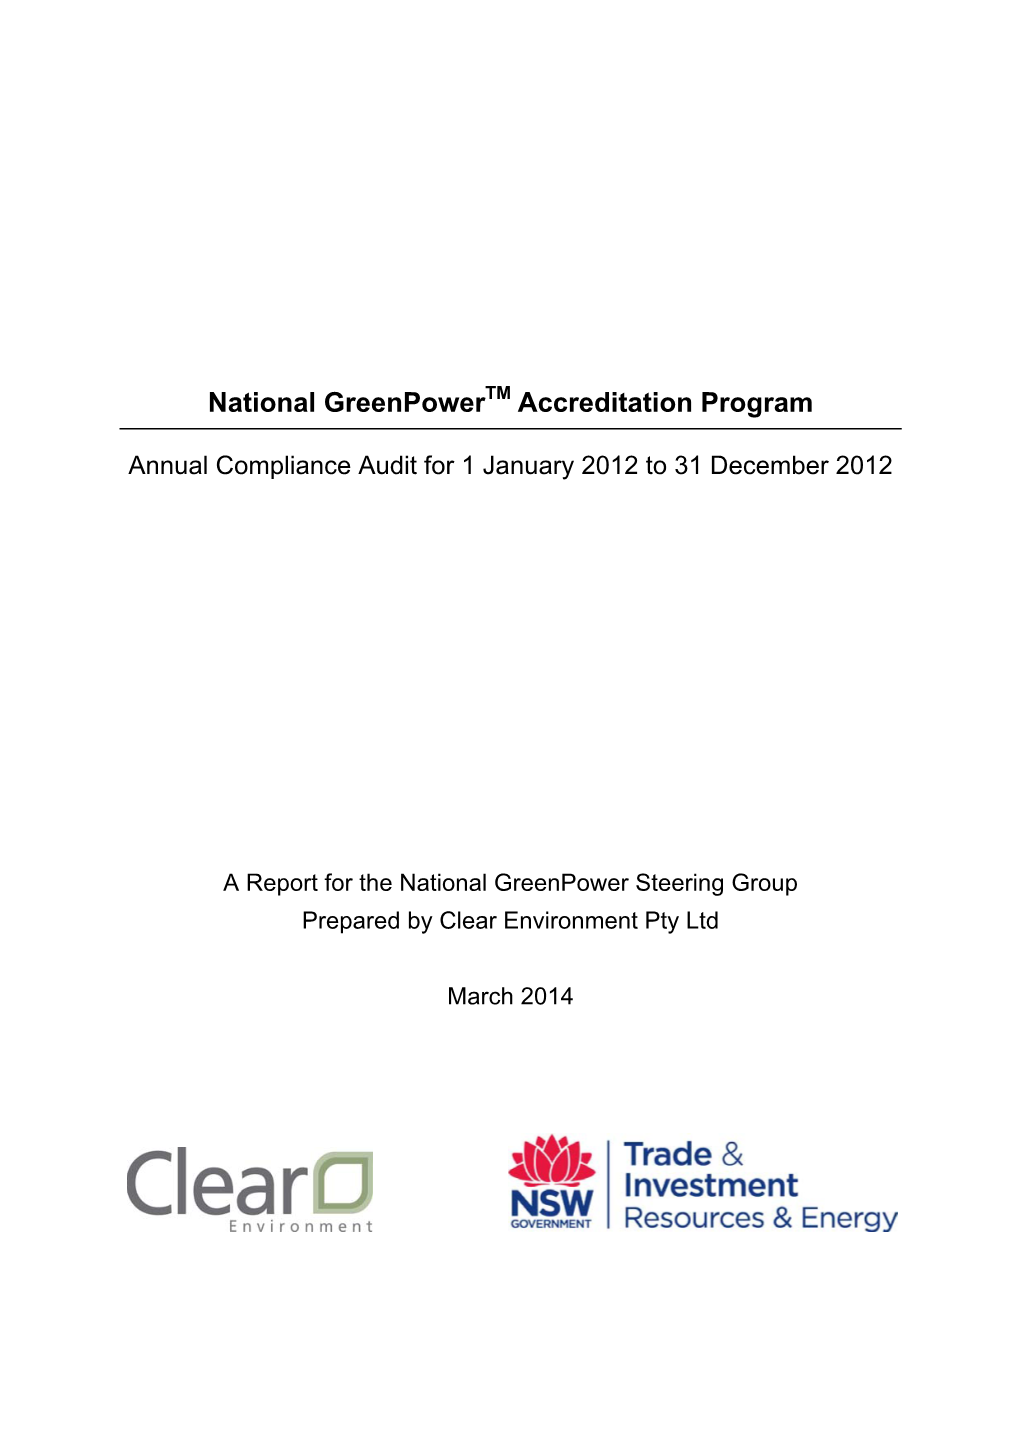 Greenpower 2012 Annual Audit Report FINAL.Pdf